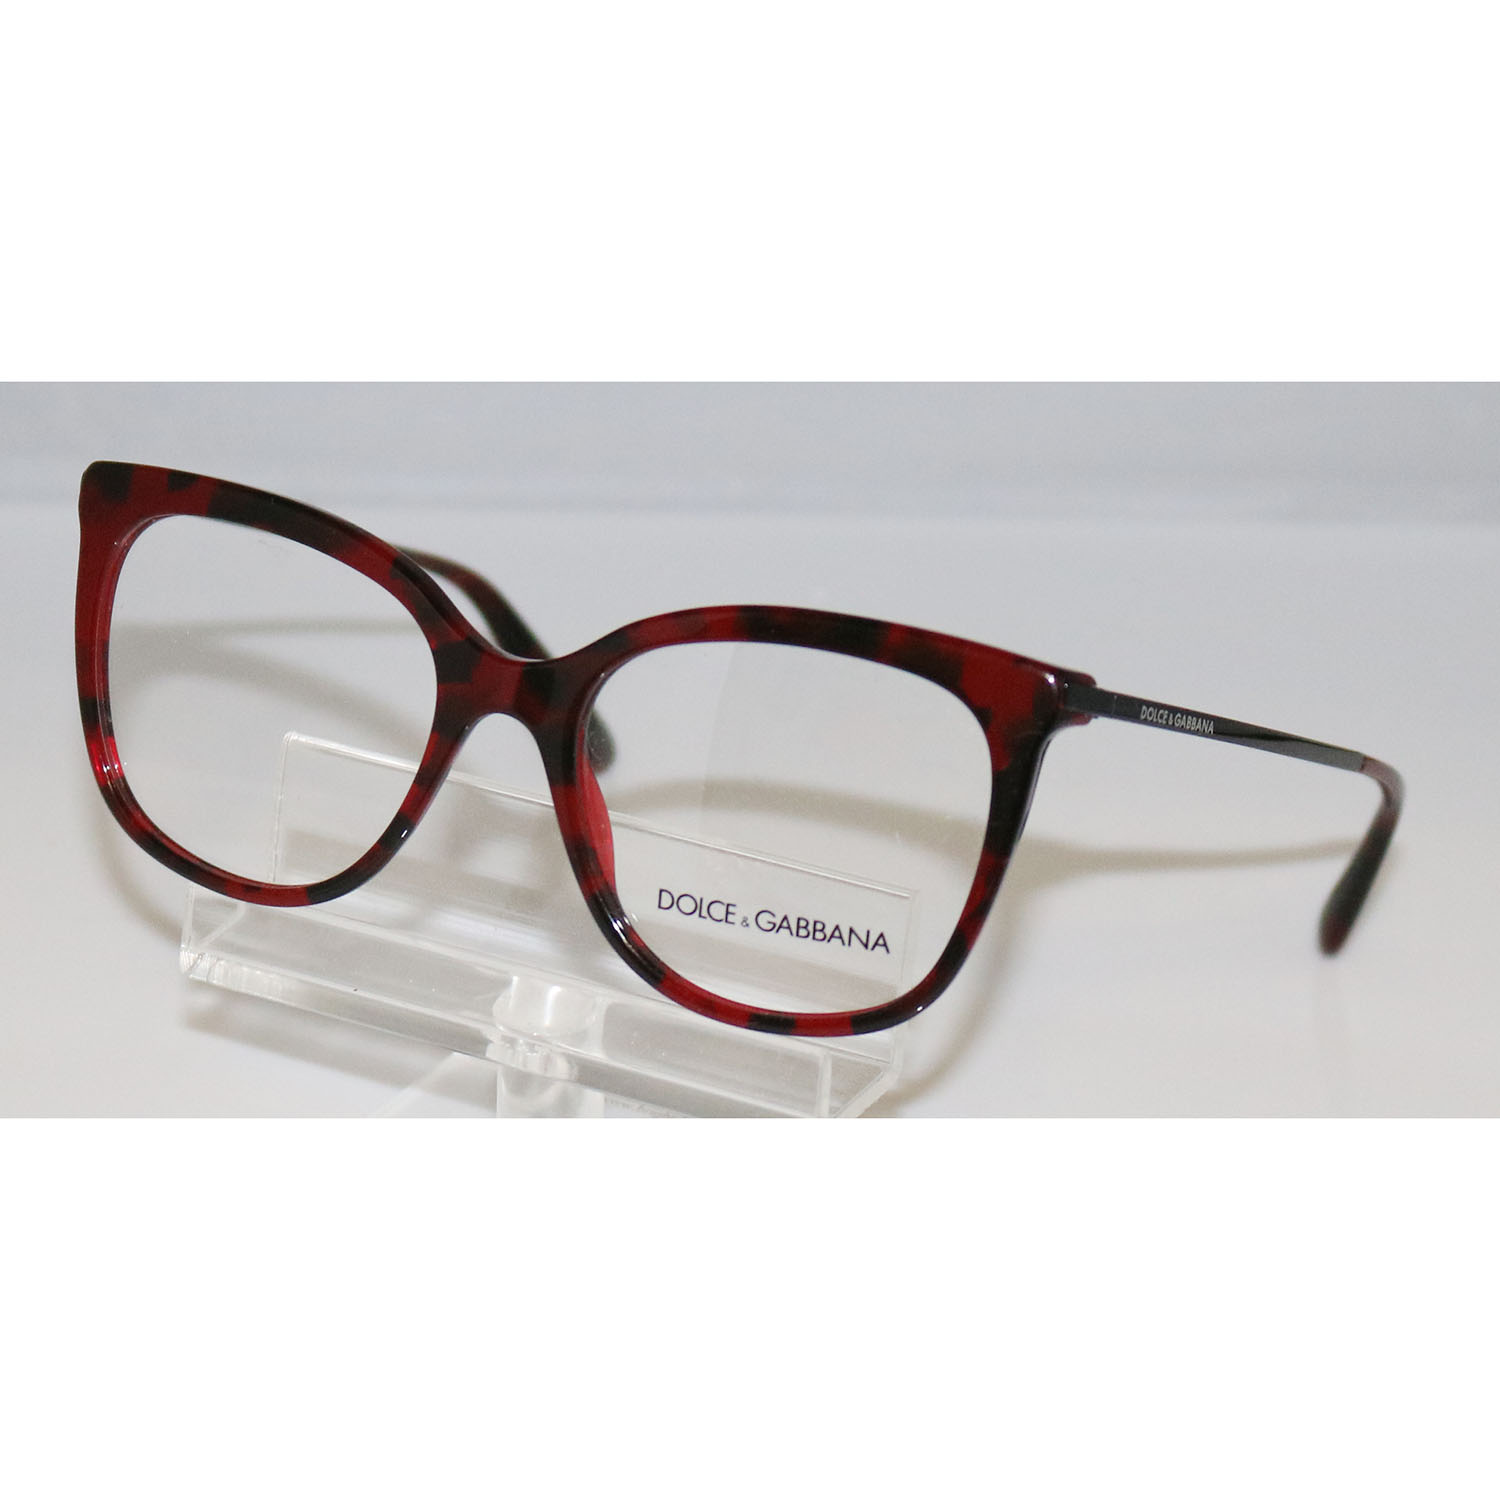 Dolce & Gabbana DG 3259 2889 Bordeaux Eyeglasses